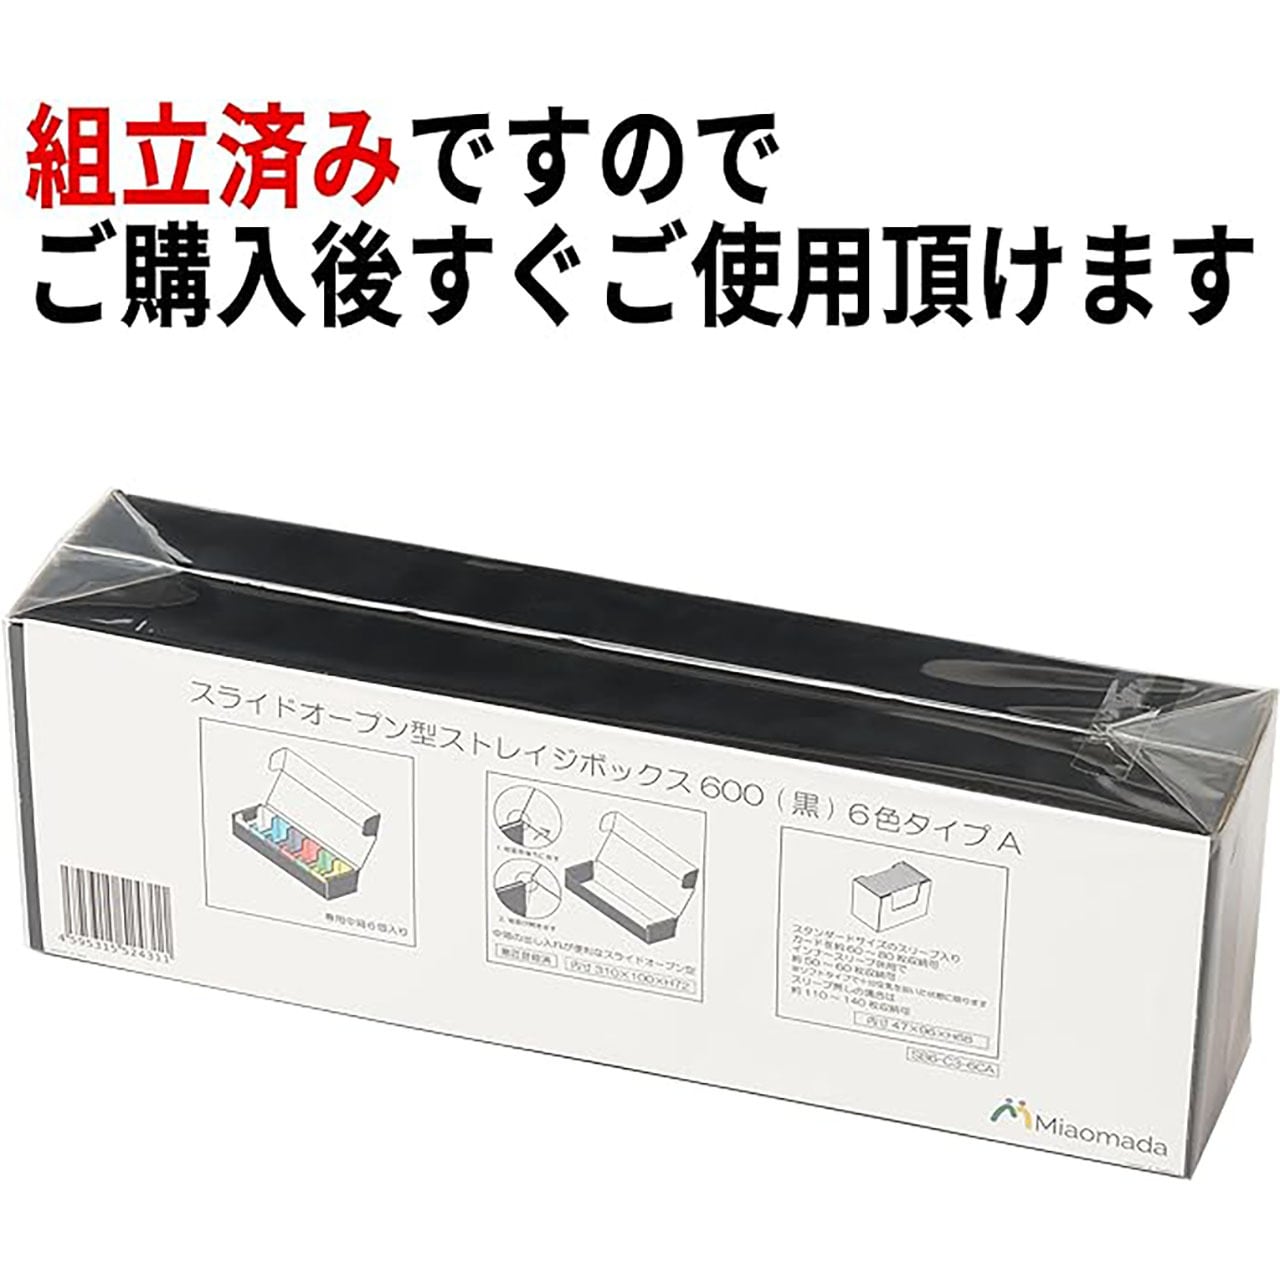 【Miaomada】スライドオープン型ストレイジボックス600(黒)6色タイプA